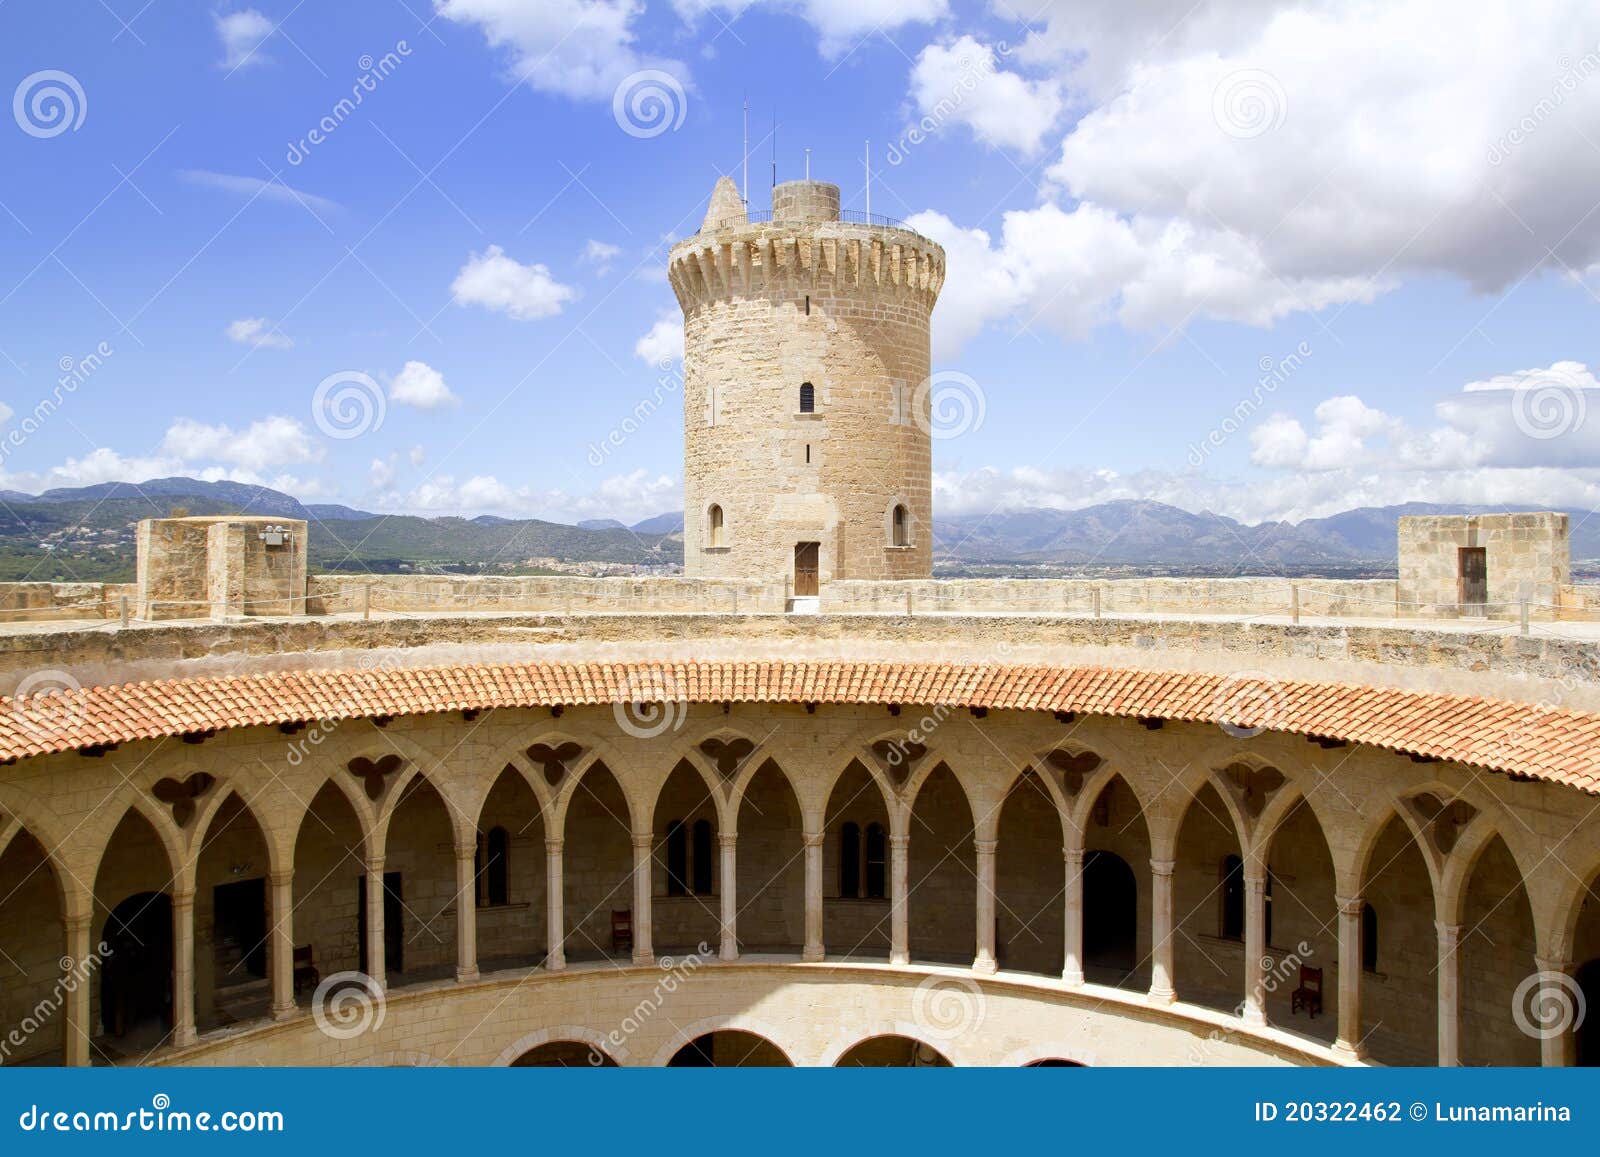 castle at palma of mallorca